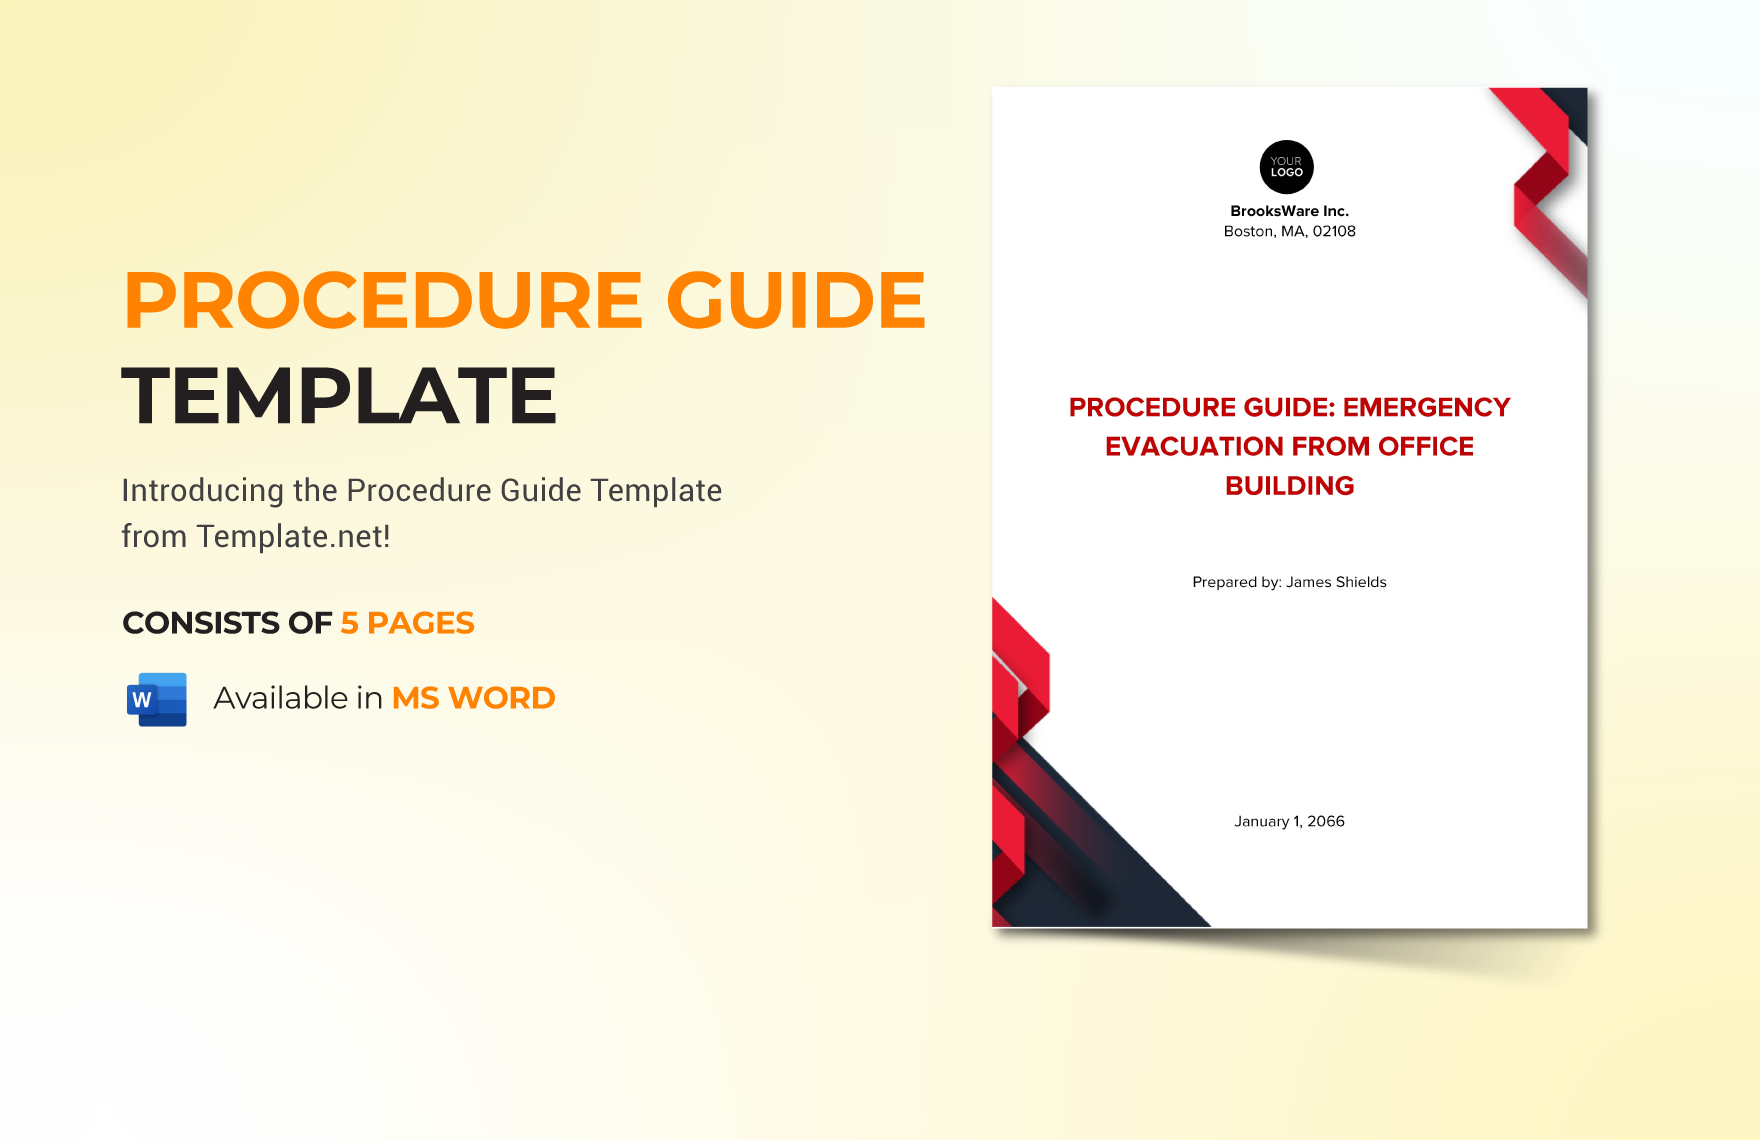 Procedure Guide Template in Word